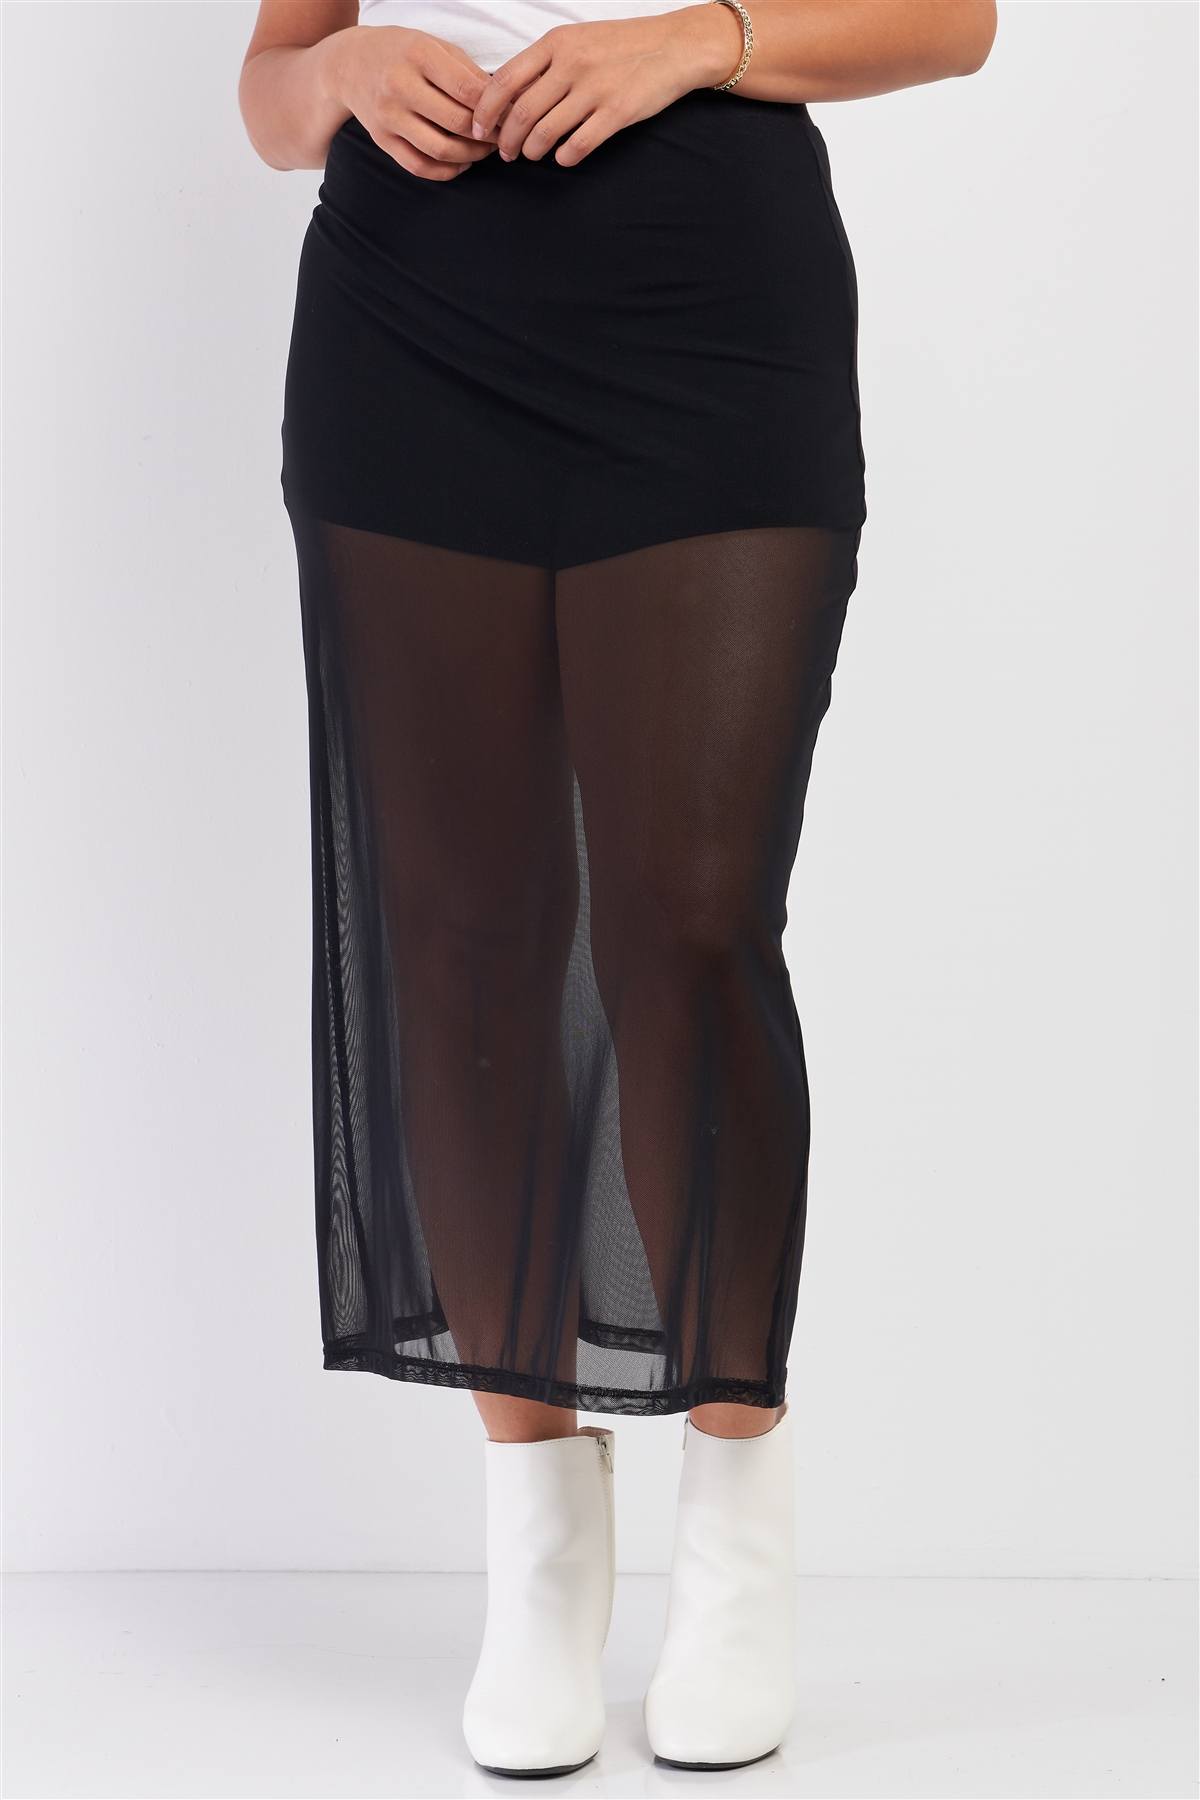 Plus Black High Waisted Sheer Mesh Underskirt Midi Skirt - Keep It Tees Shop